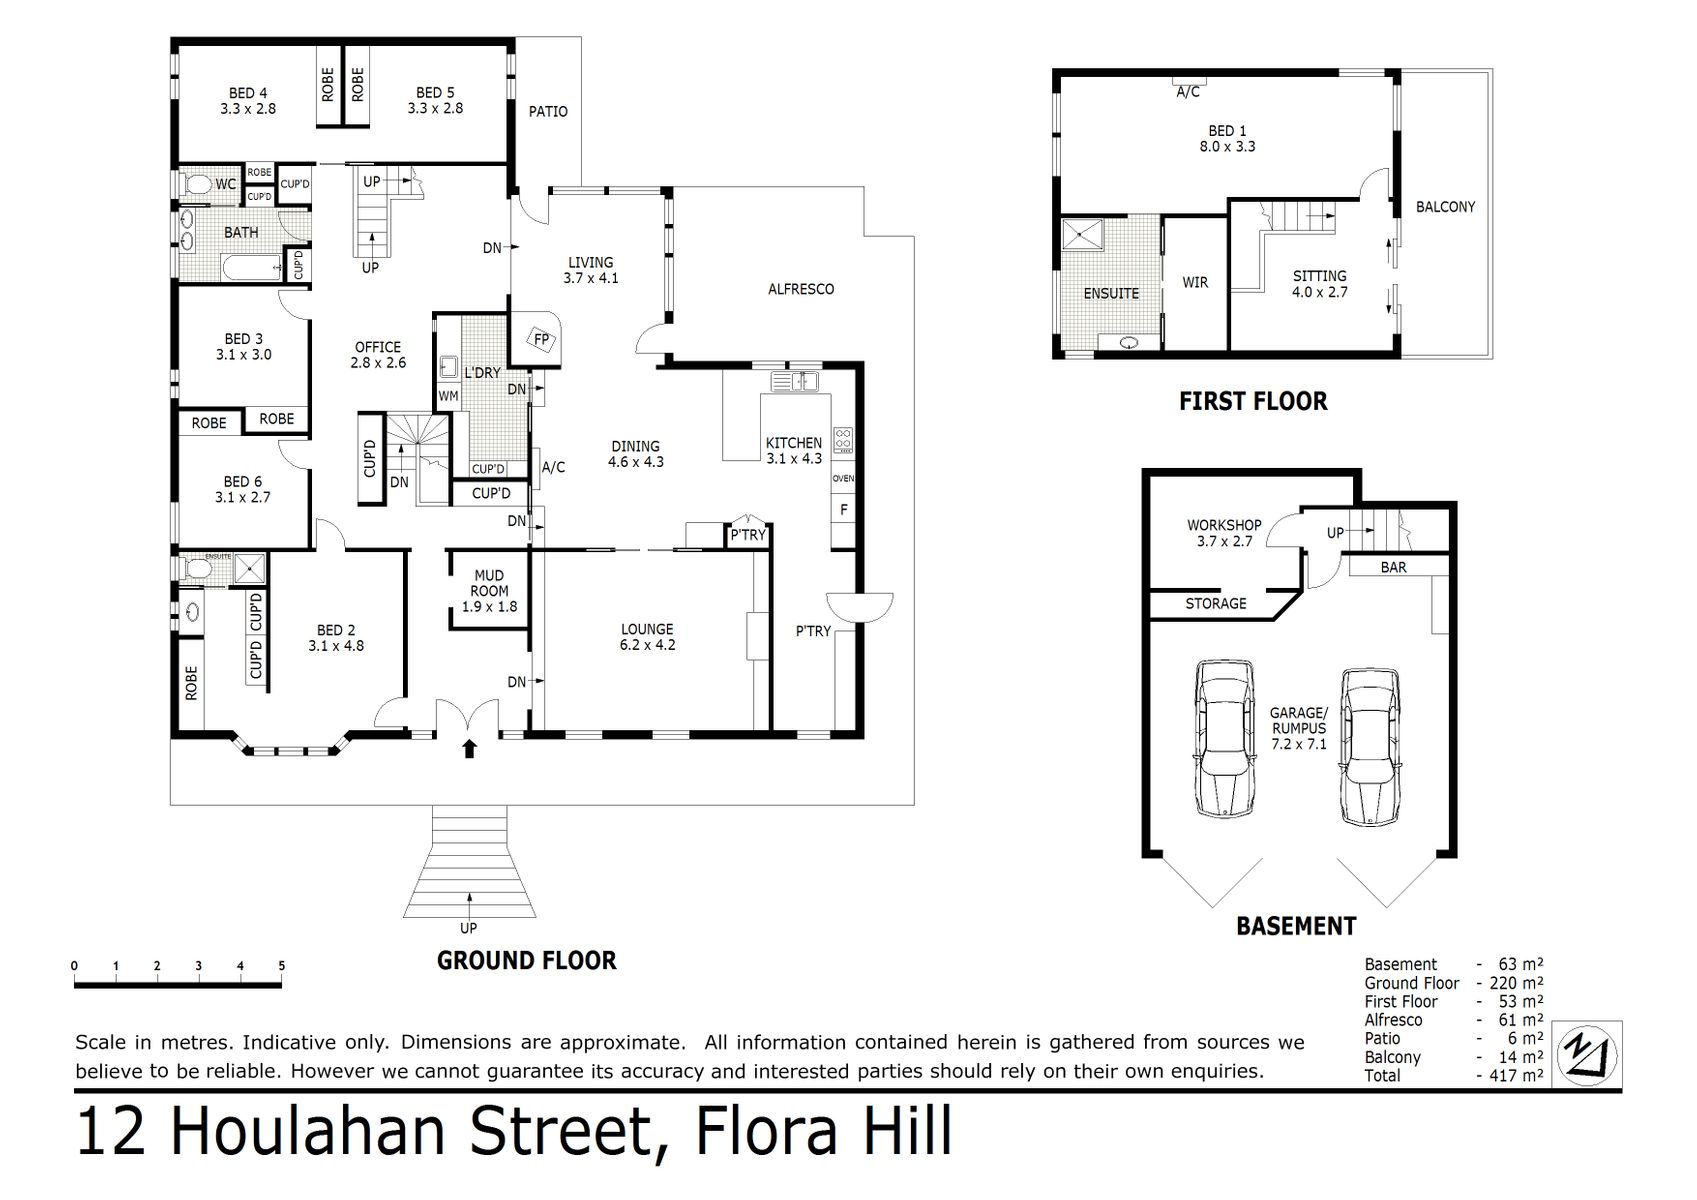 12 Houlahan Street Flora Hill (13 AUG 2020) 336sqm (3)